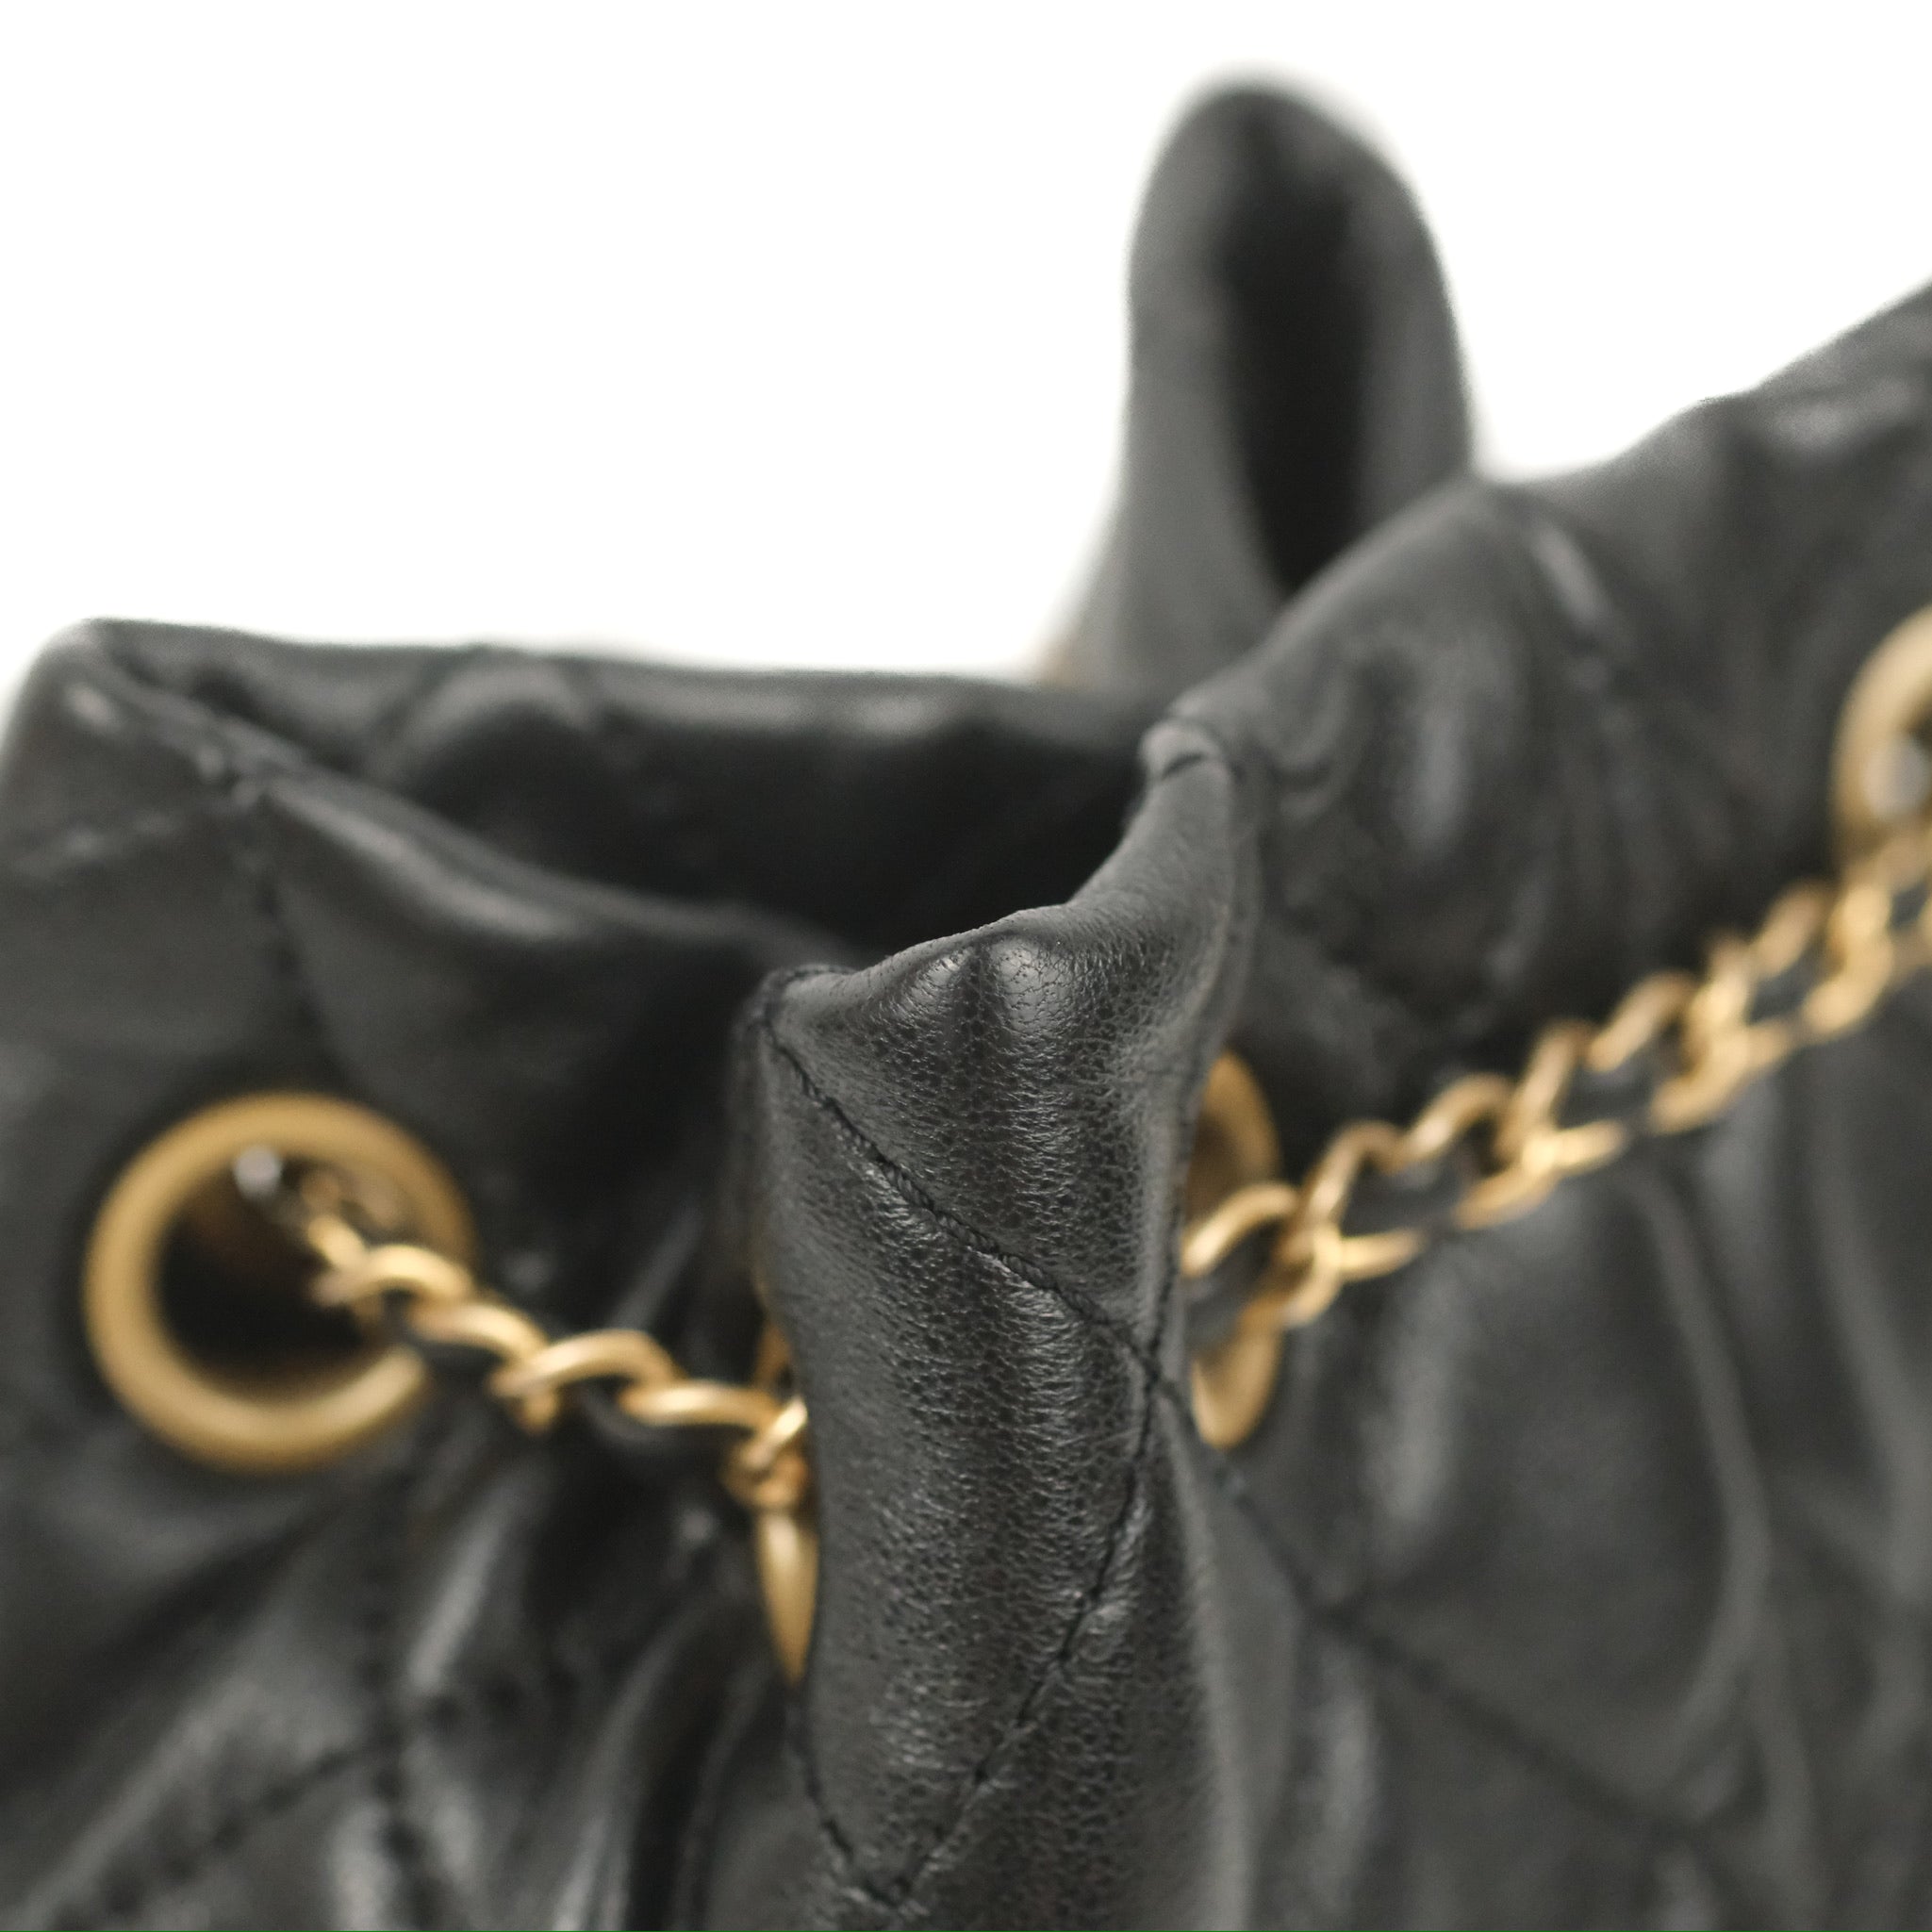 Chanel 2021 Crush on Chains Bucket Bag